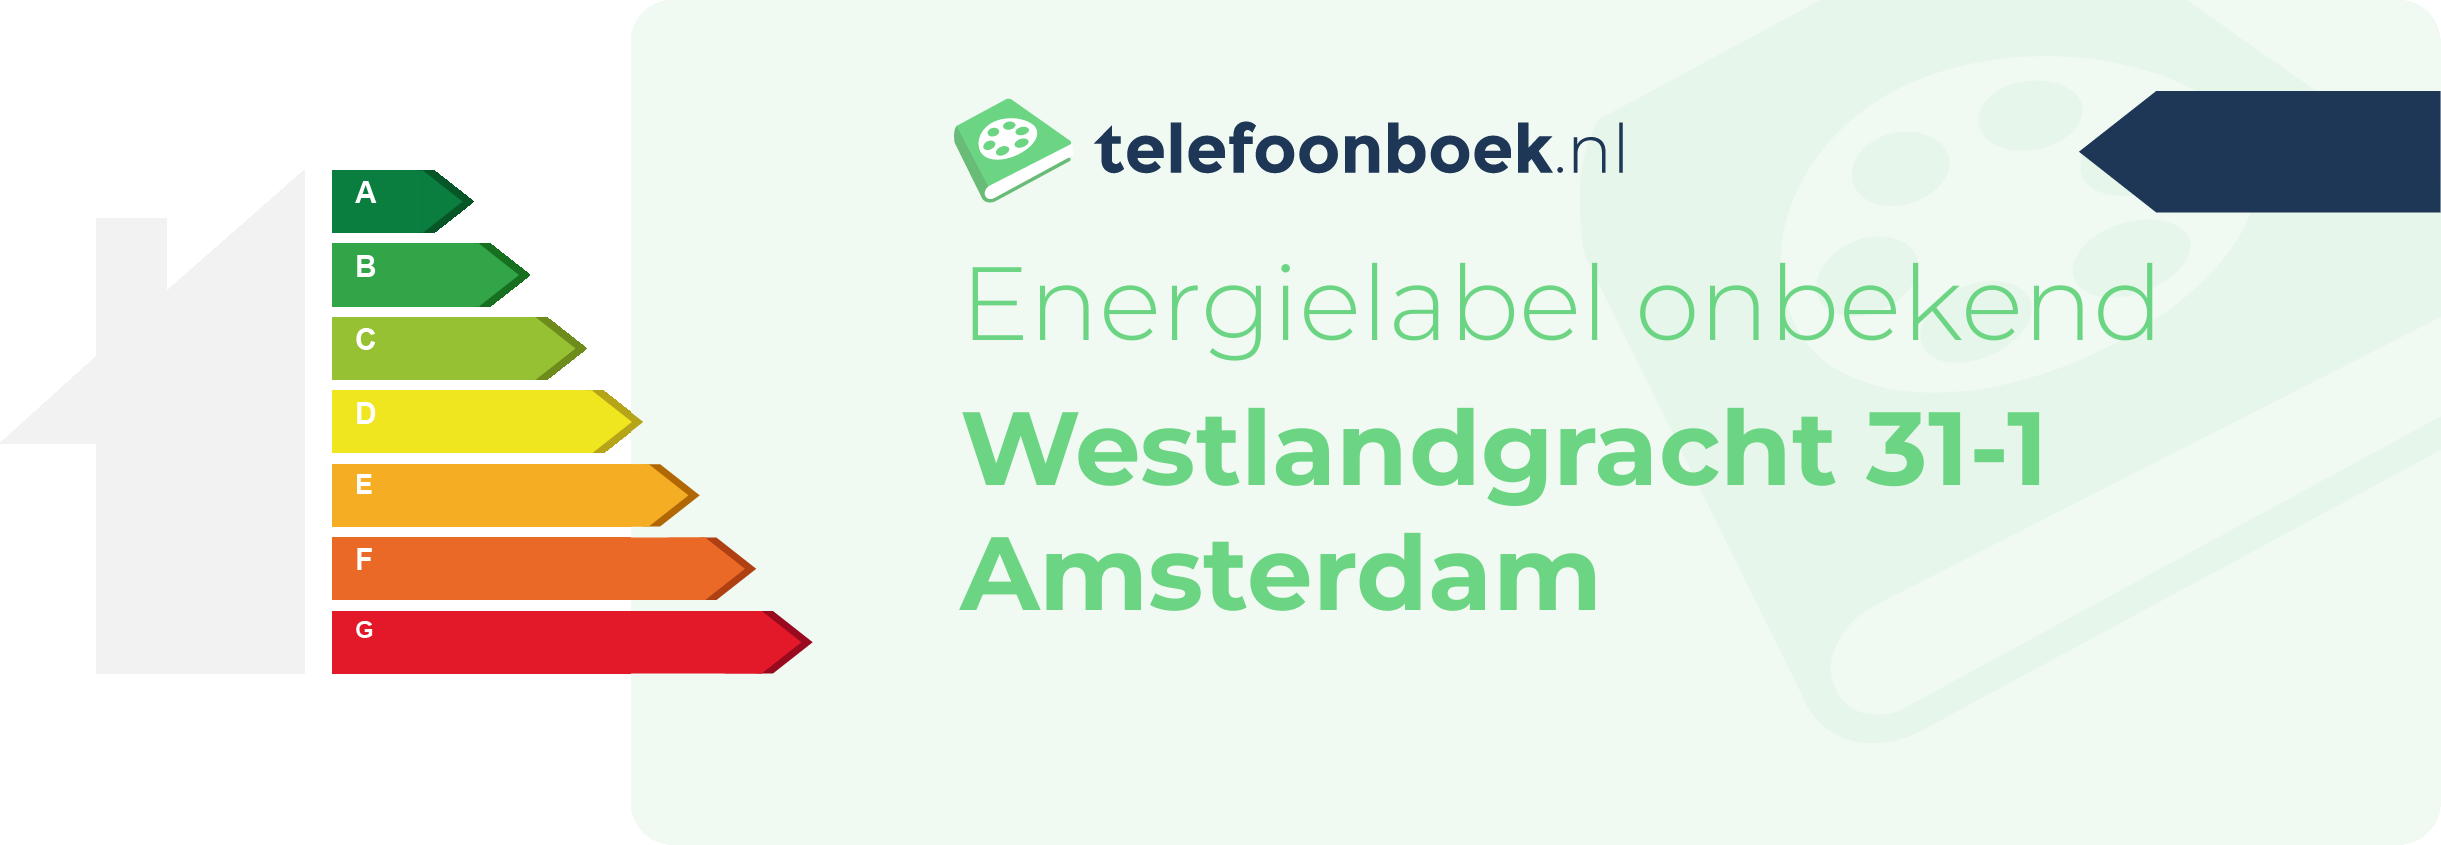 Energielabel Westlandgracht 31-1 Amsterdam